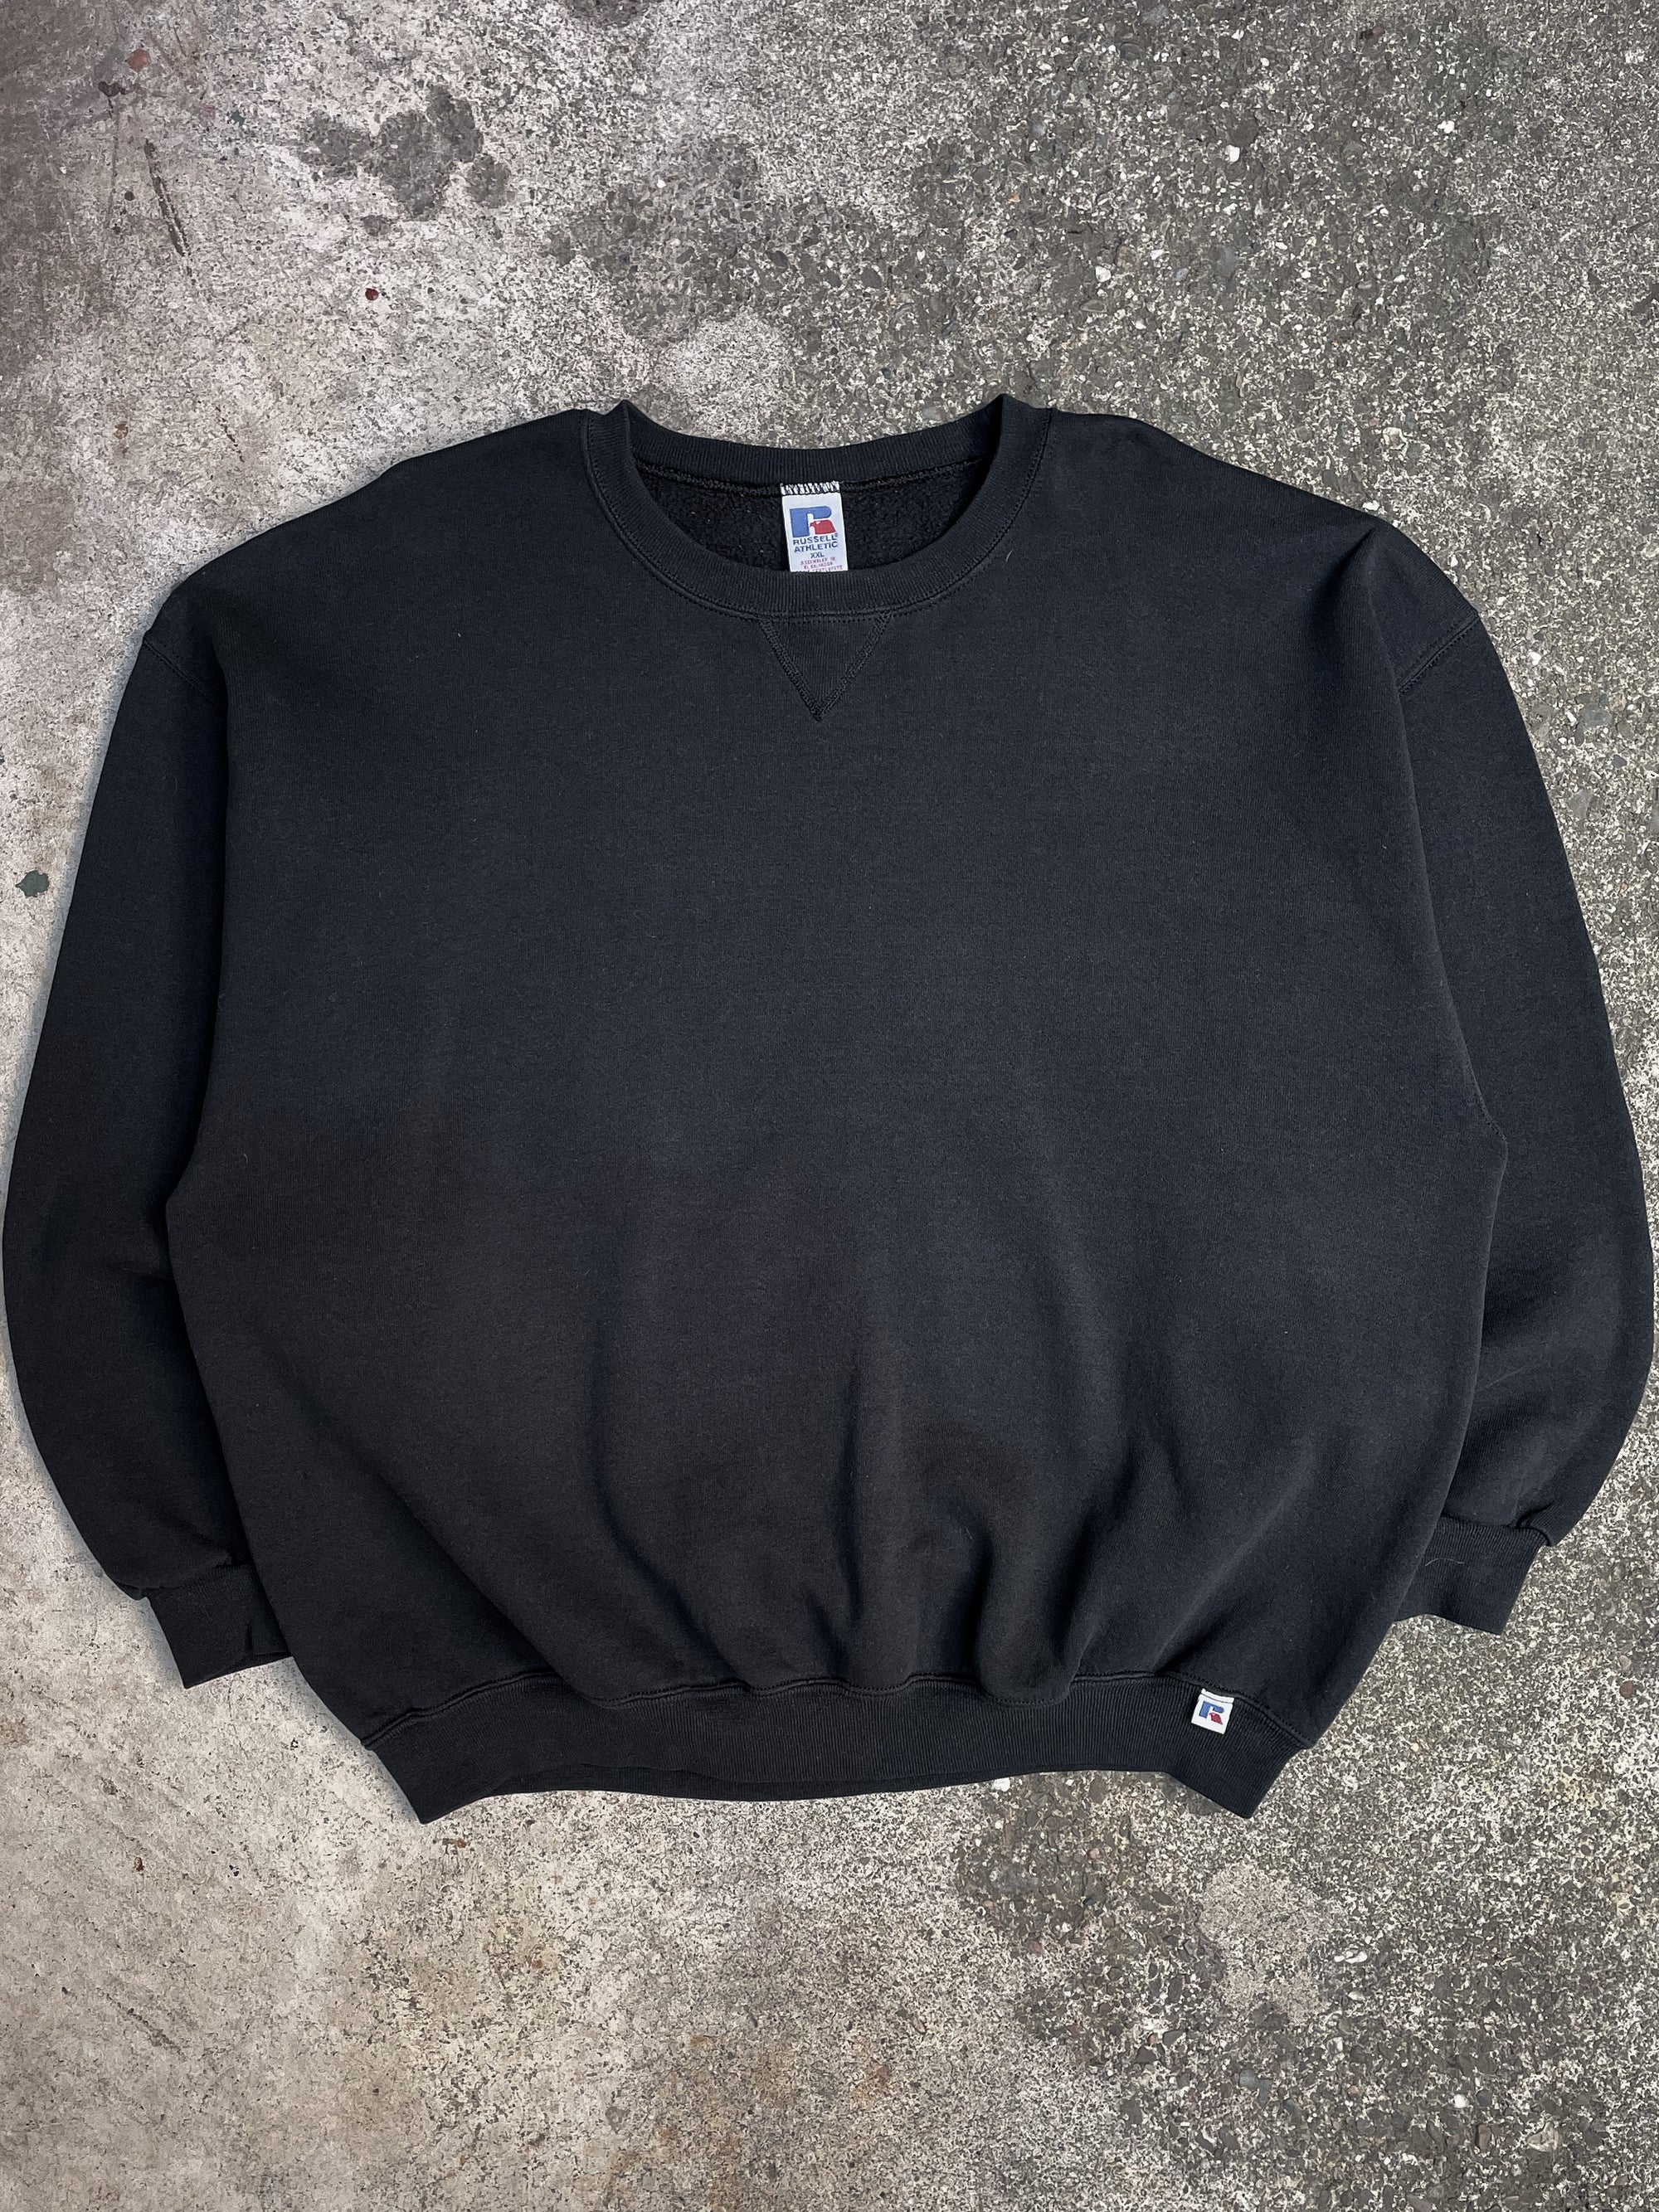 Vintage Russell Black Blank Sweatshirt (XXL)